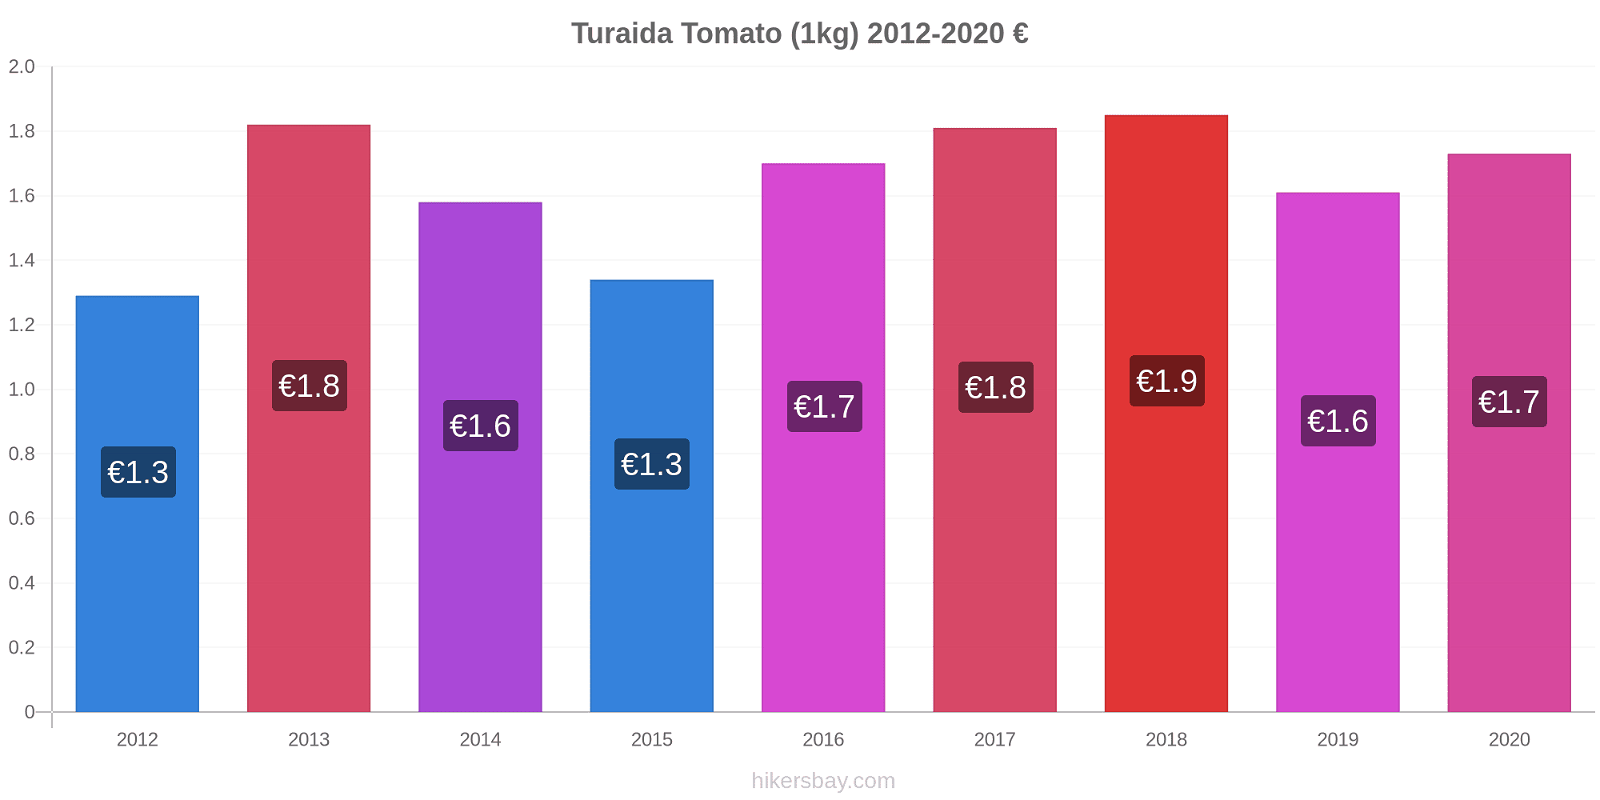 Turaida price changes Tomato (1kg) hikersbay.com